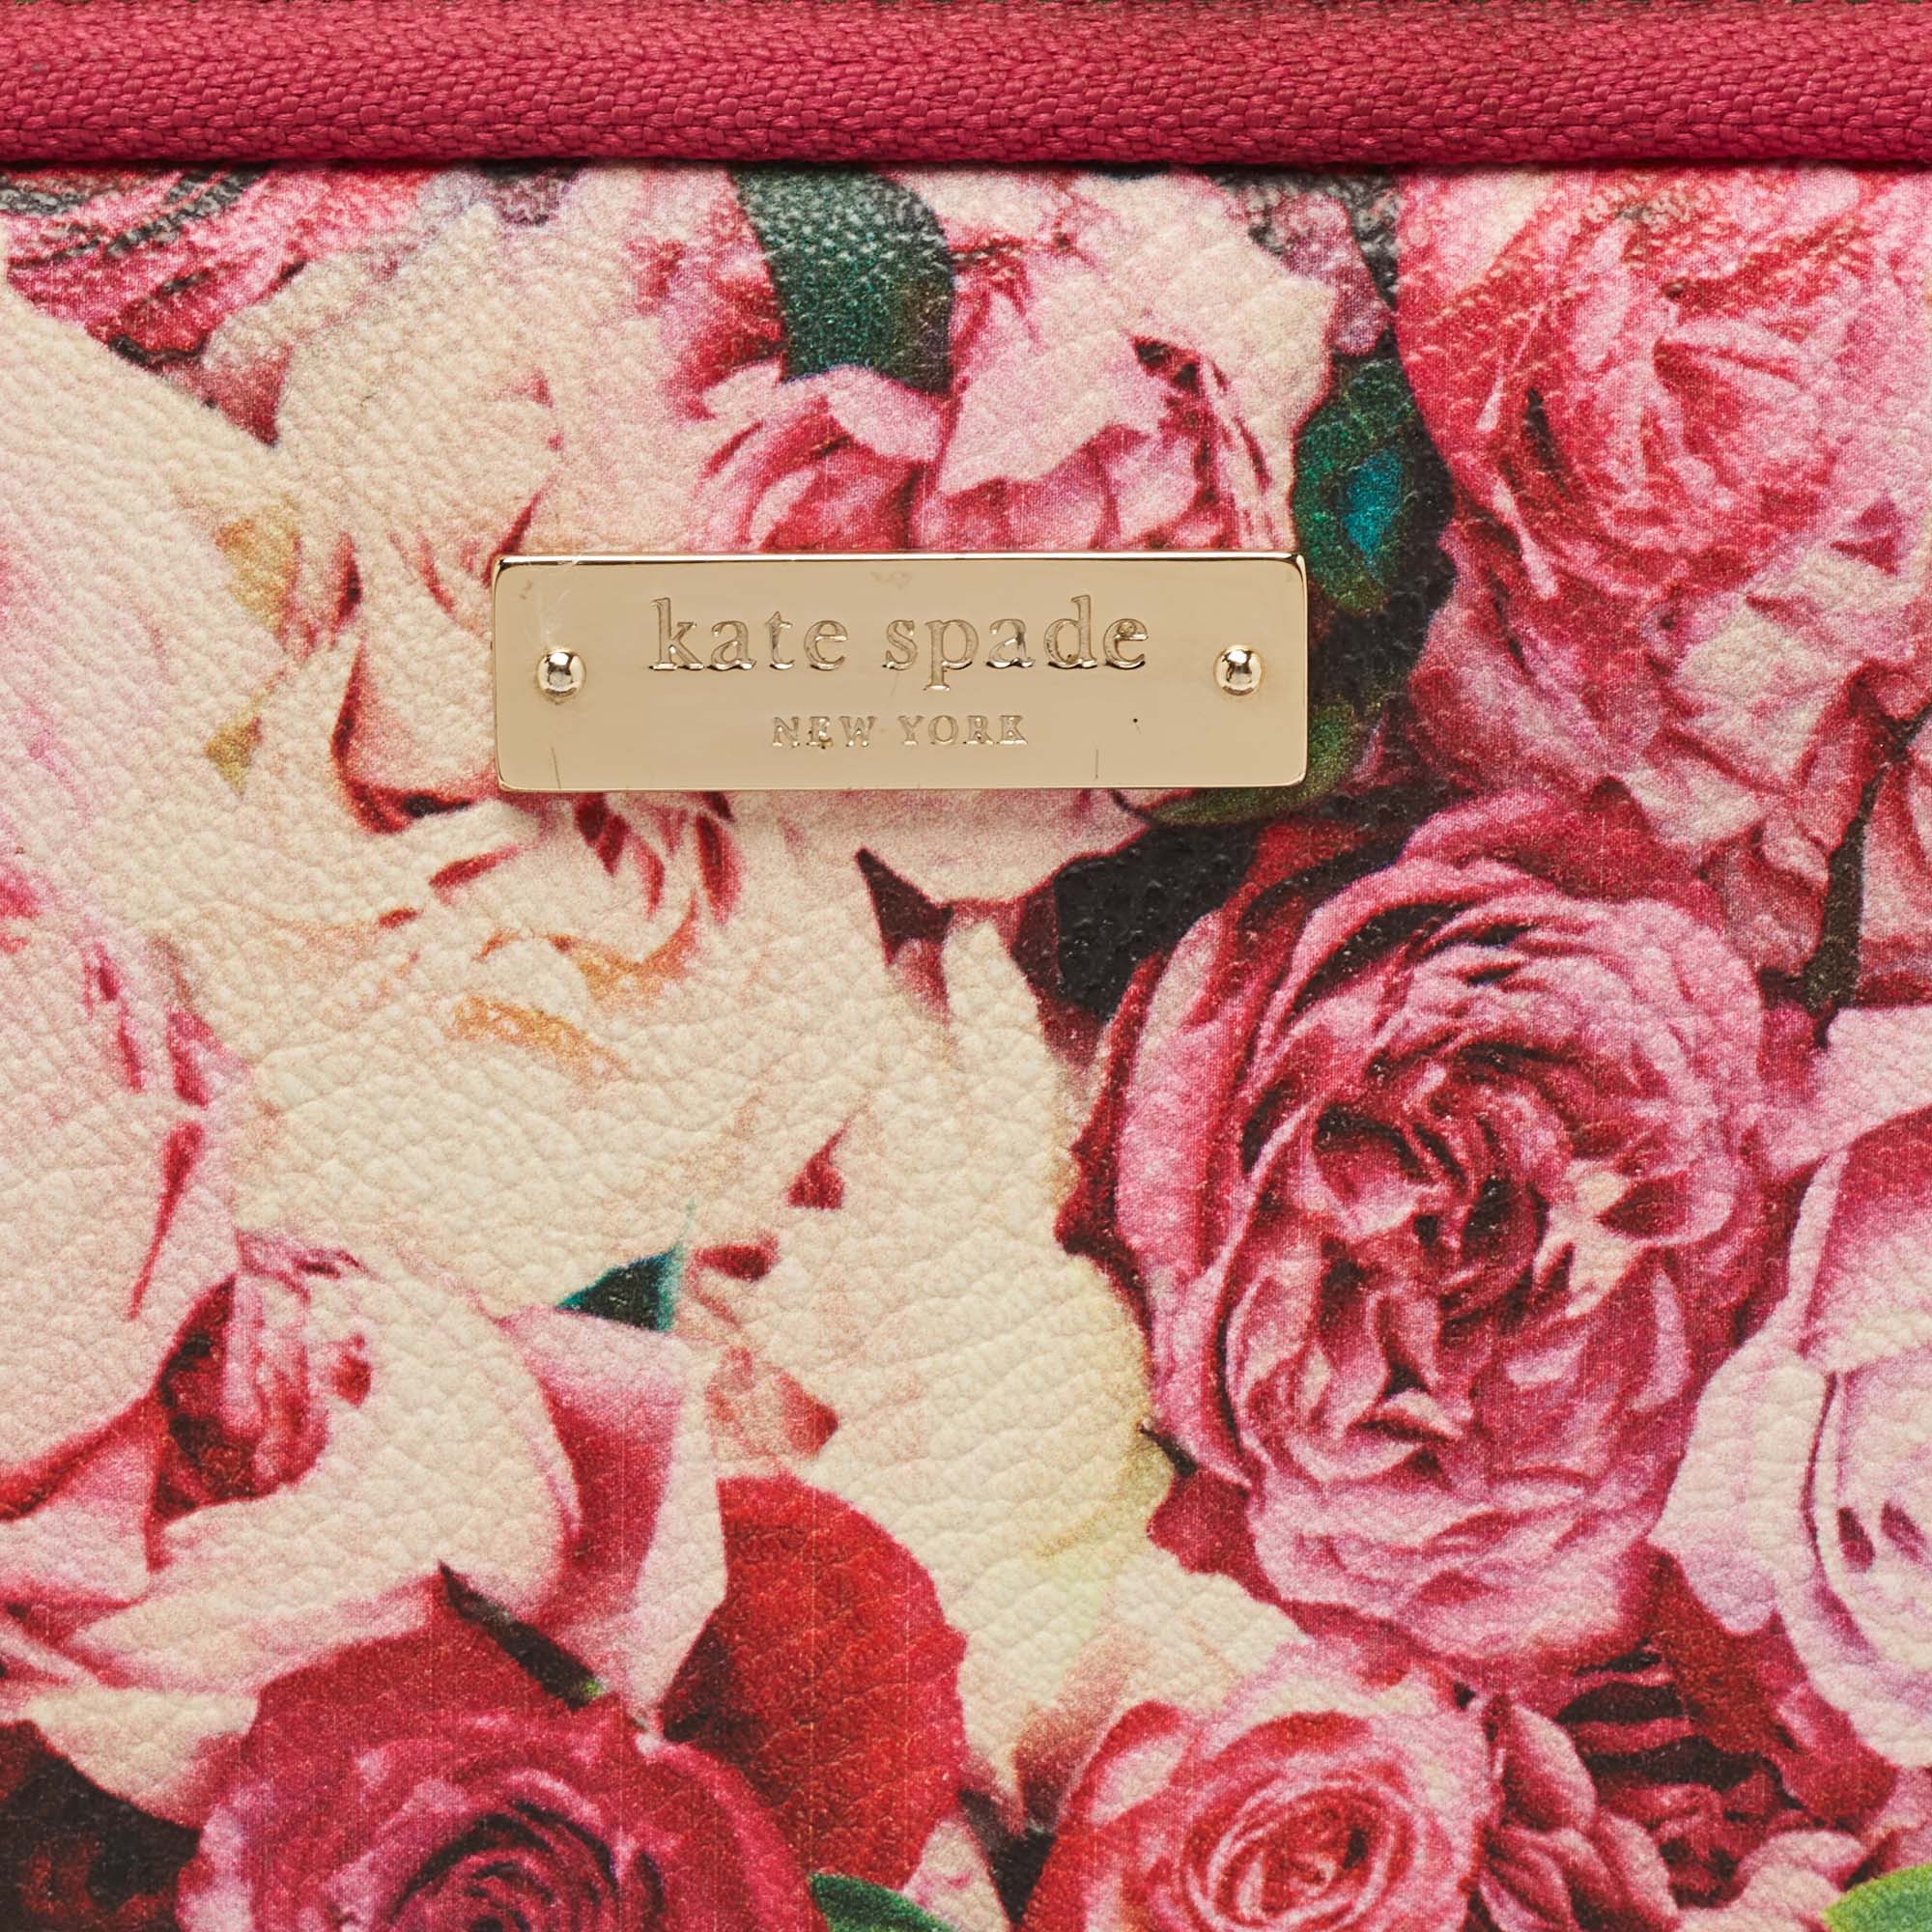 Kate Spade Pink Floral Print Leather Laptop Sleeve Kate Spade